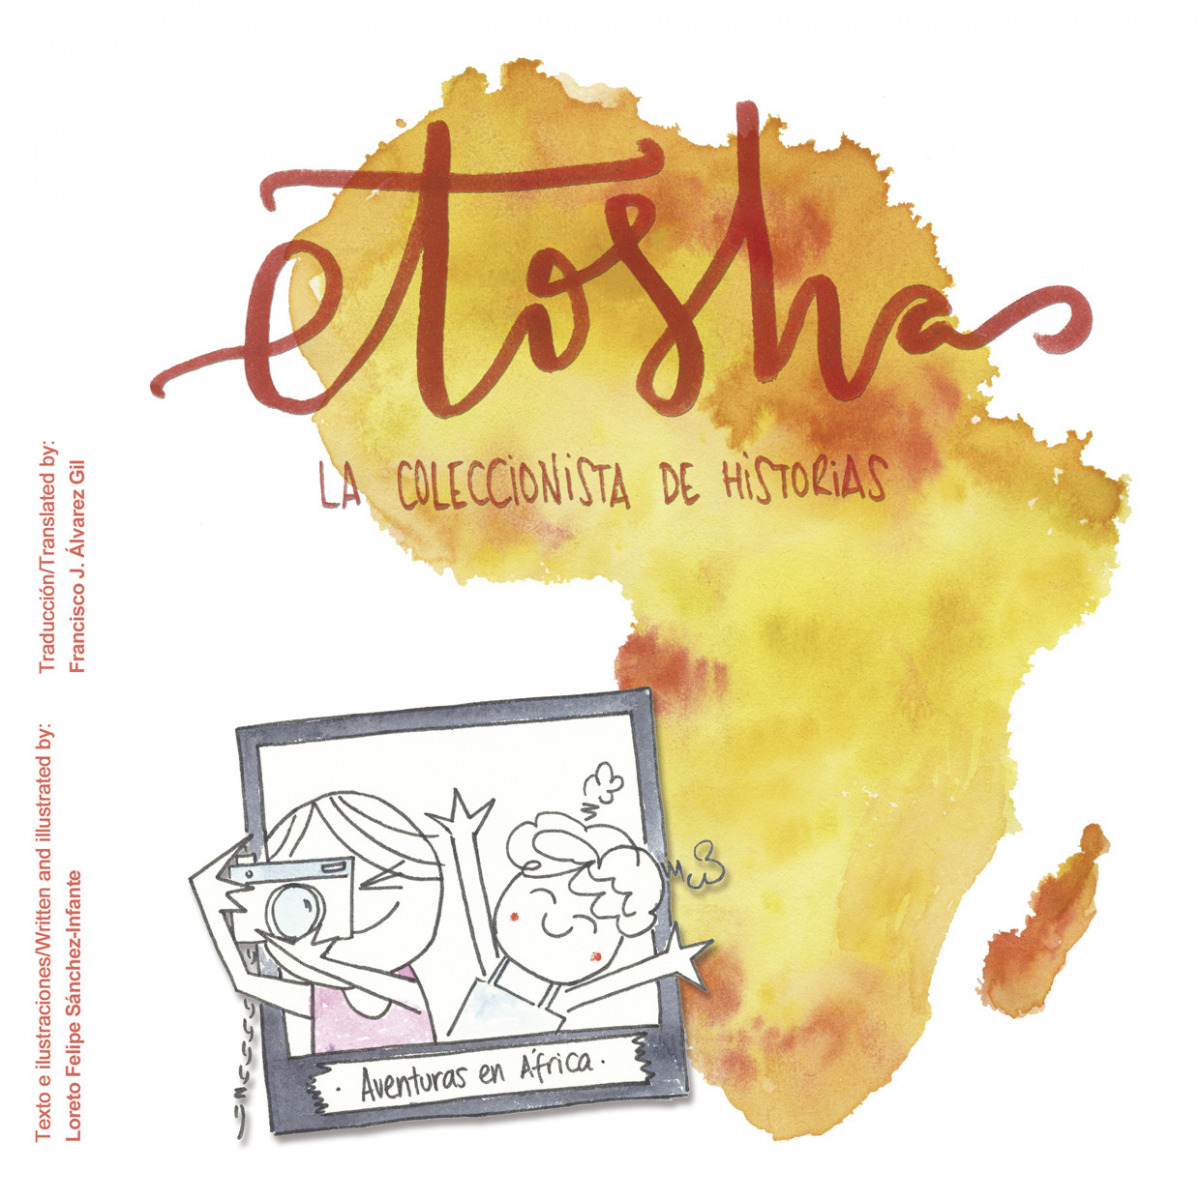 Etosha, la coleccionista de historias etosha, the collector - Felipe Sanchez-infante, Loreto